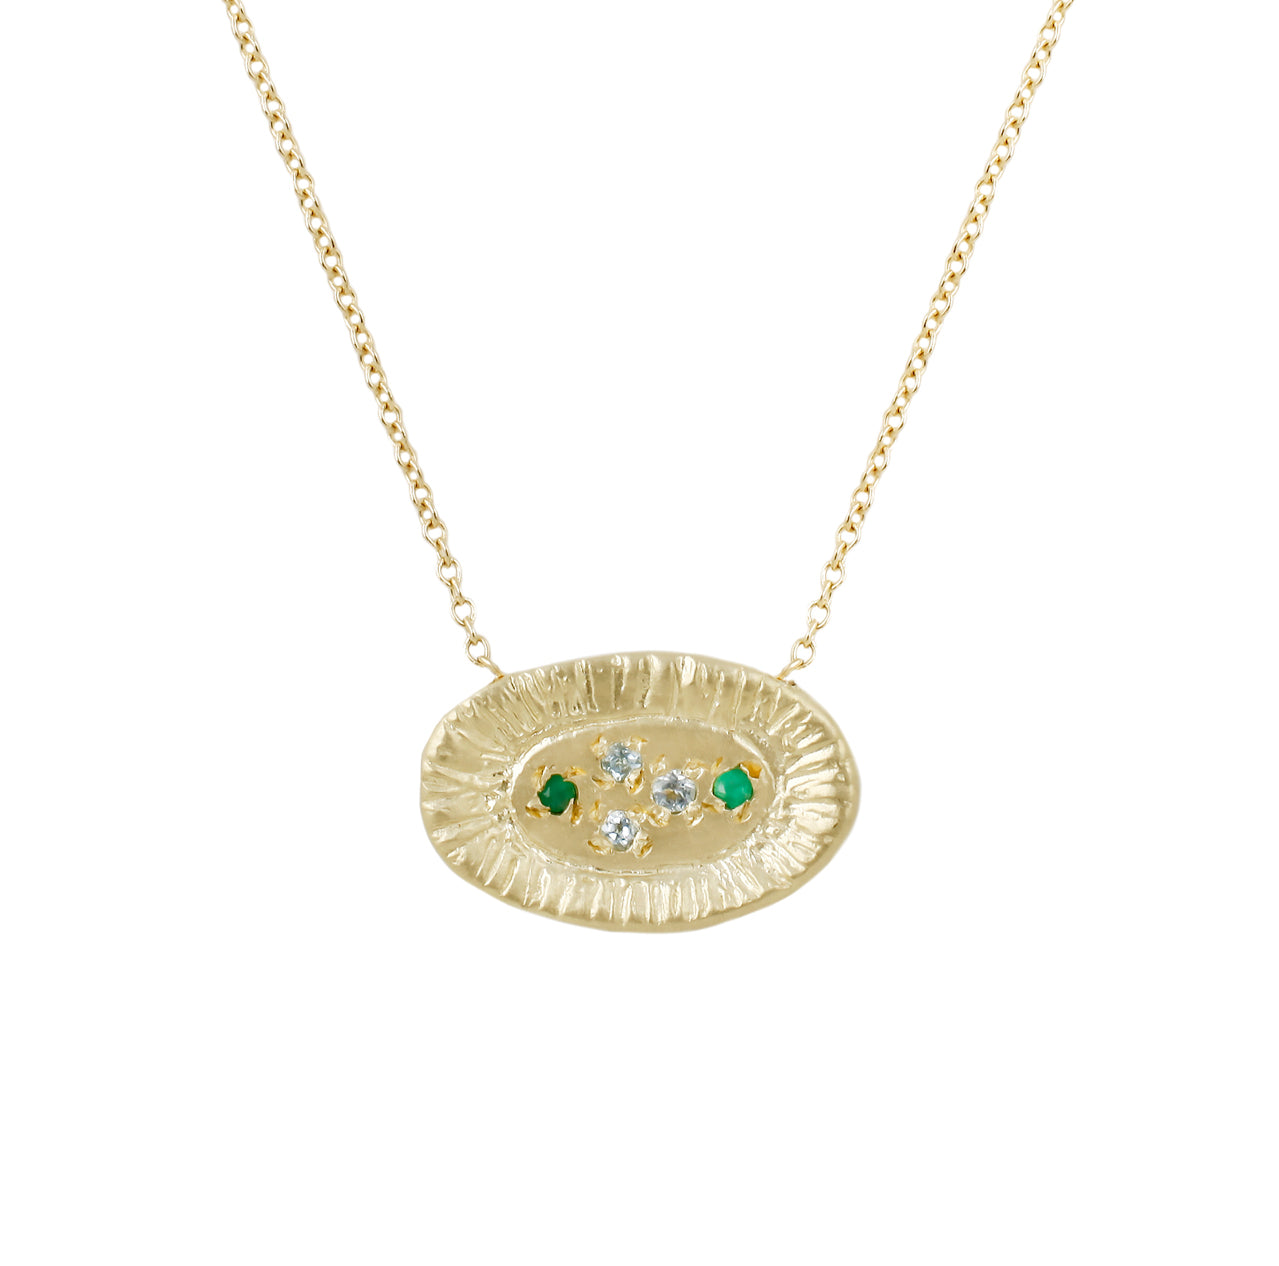 Sunburst necklace-emerald